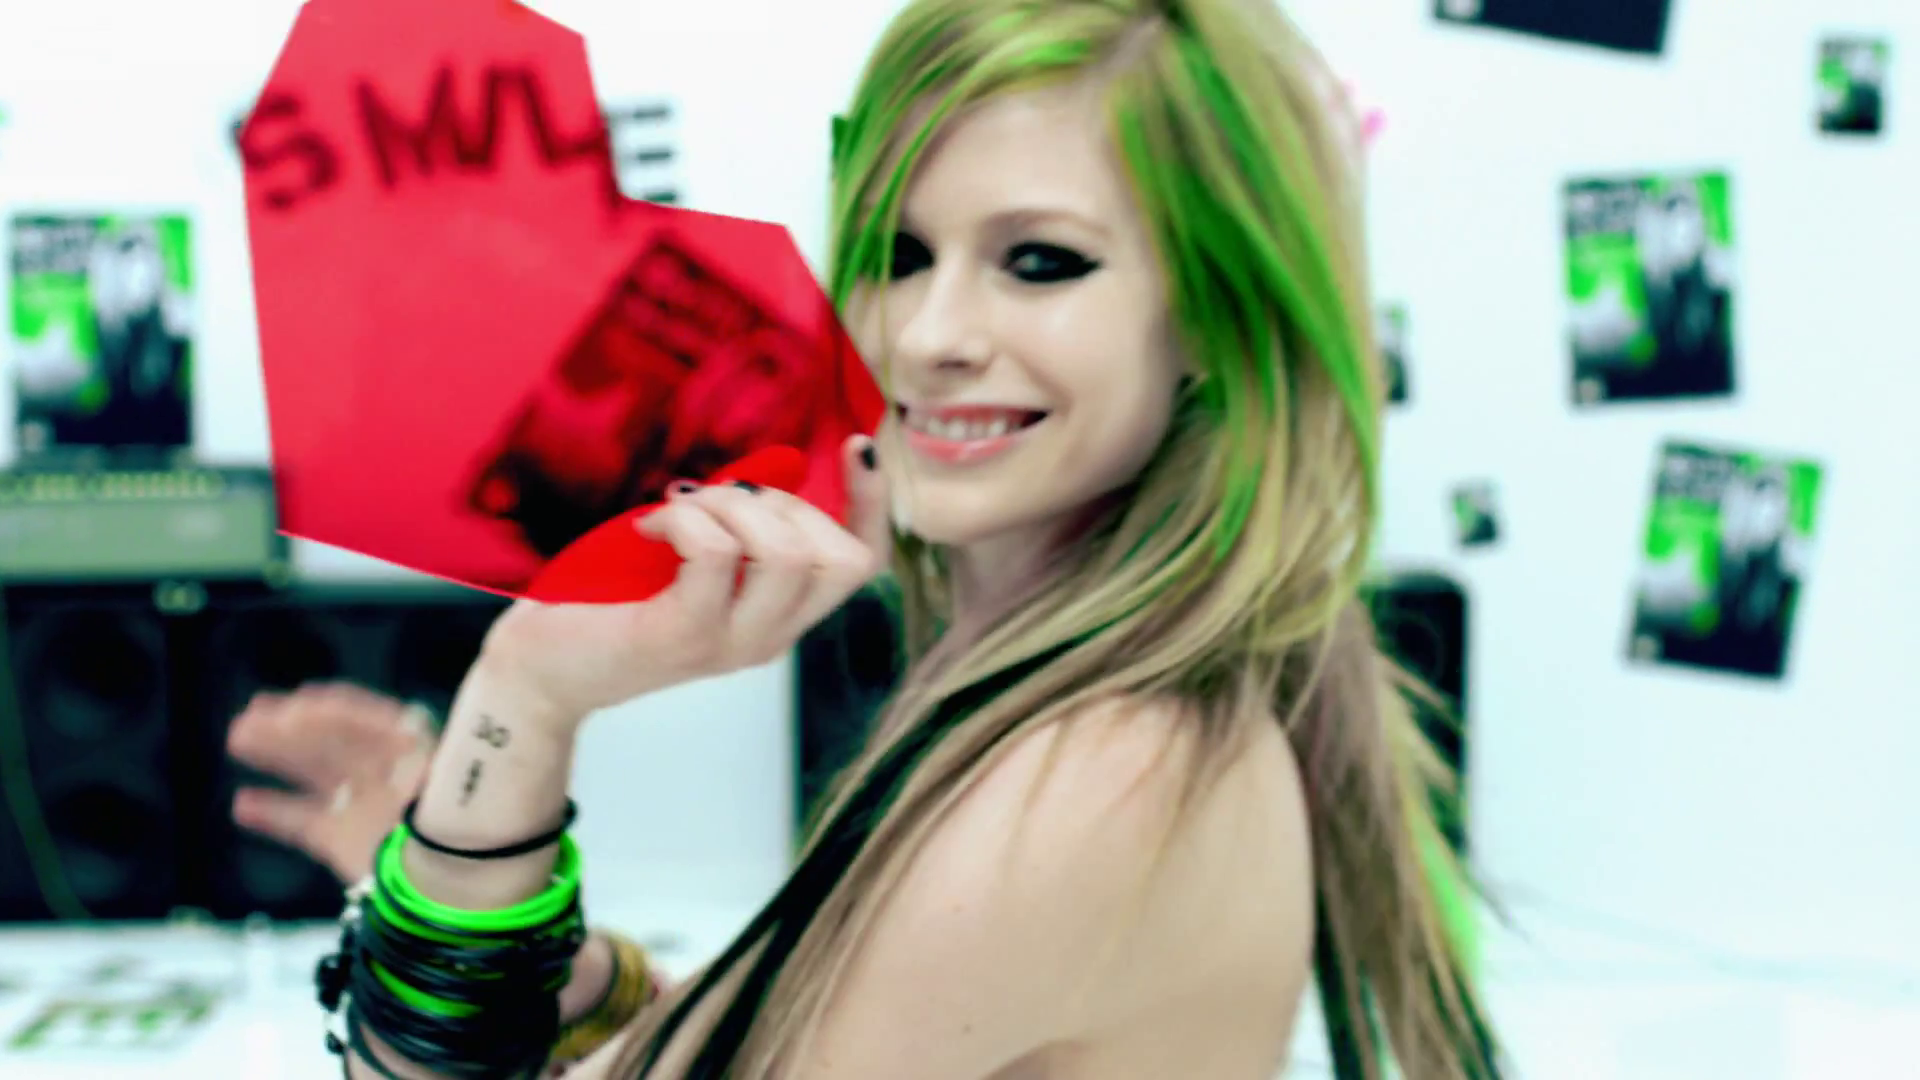 Avril lavigne photo smile